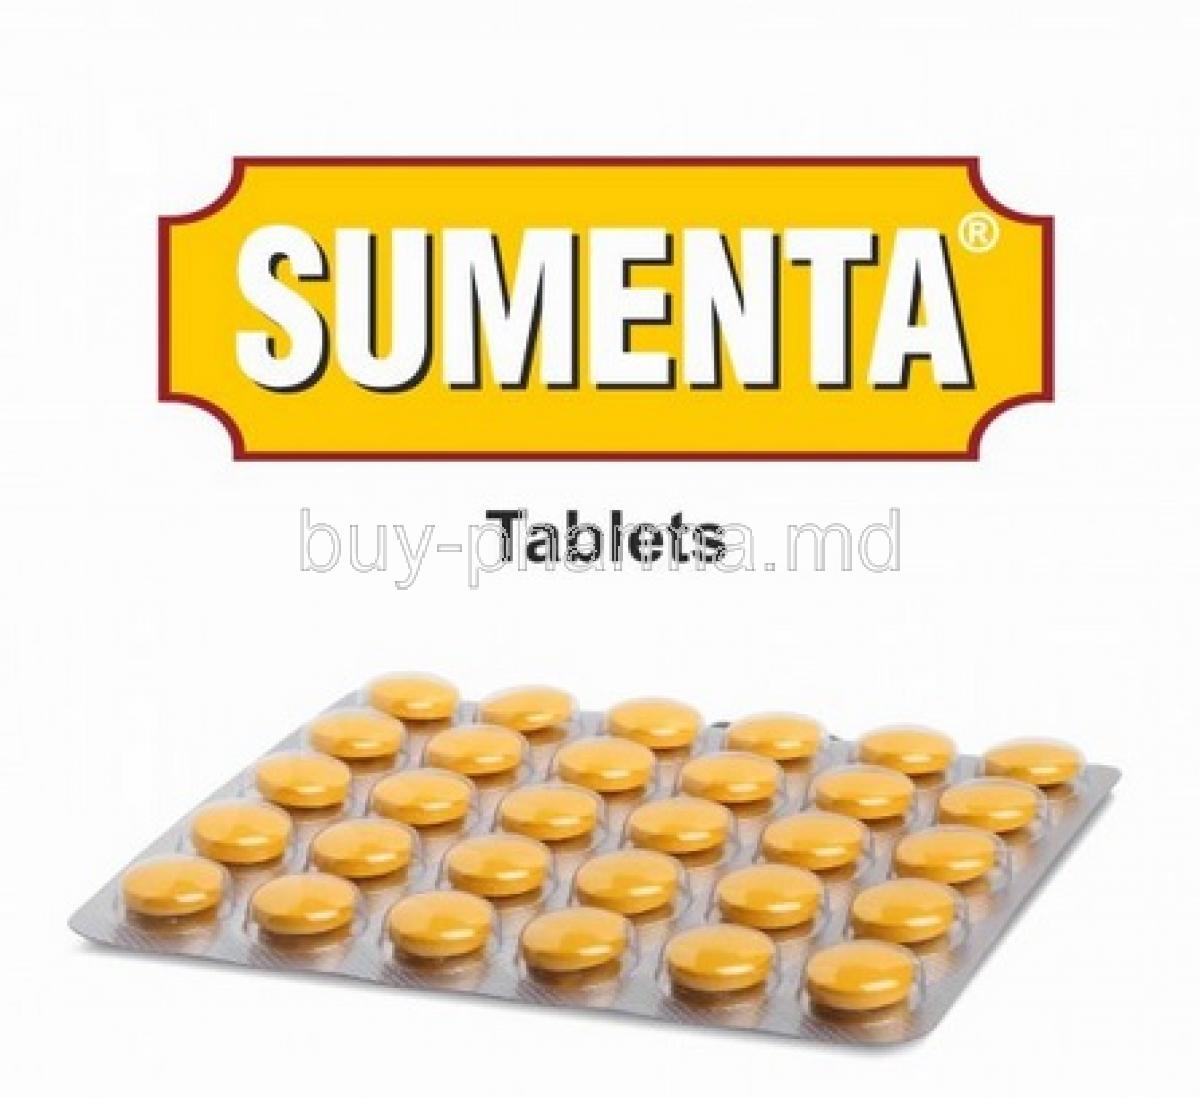 Sumenta box and tablets